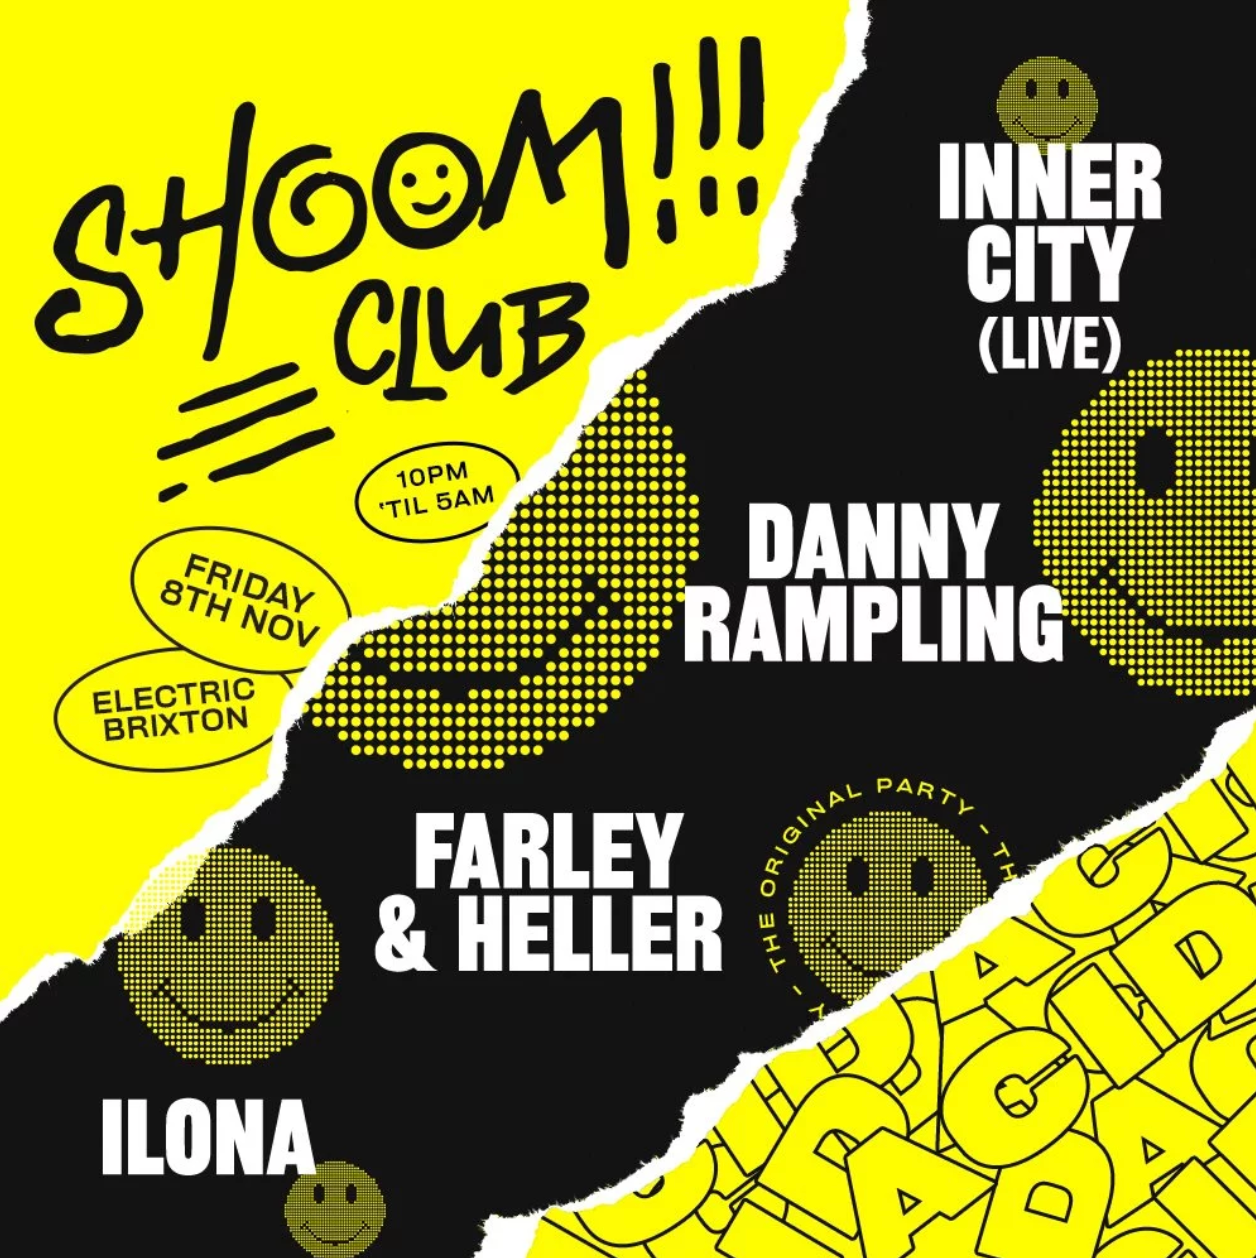 Acid house pioneer Danny Rampling to revive Shoom party in London image